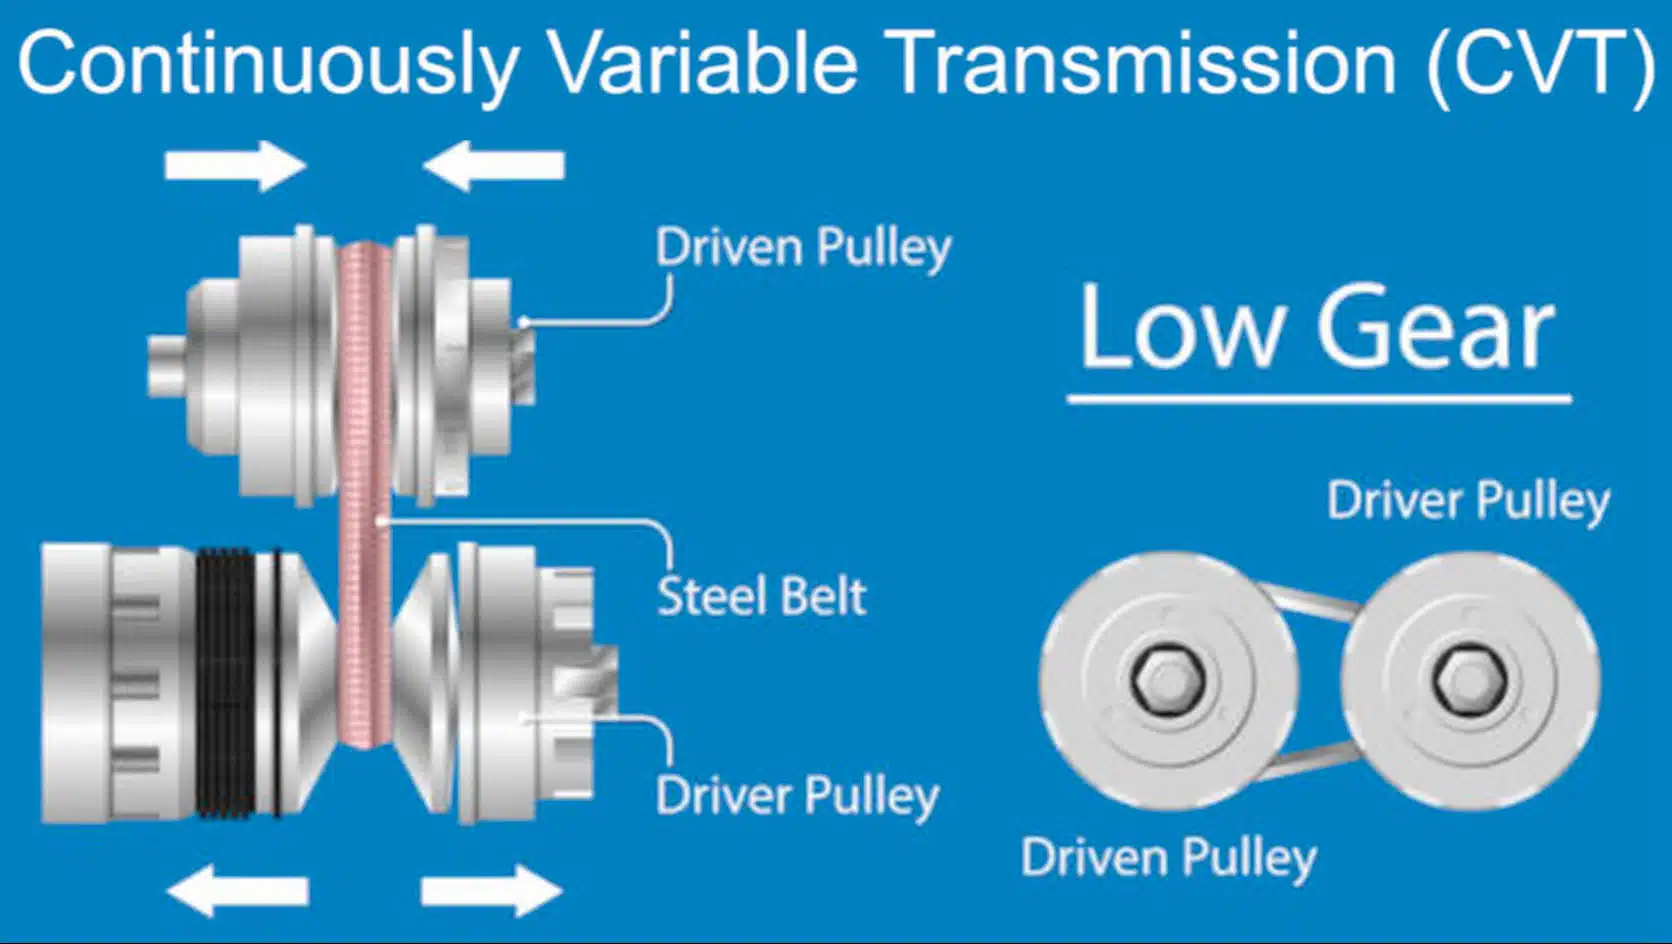 CVT transmission diagram - low gear